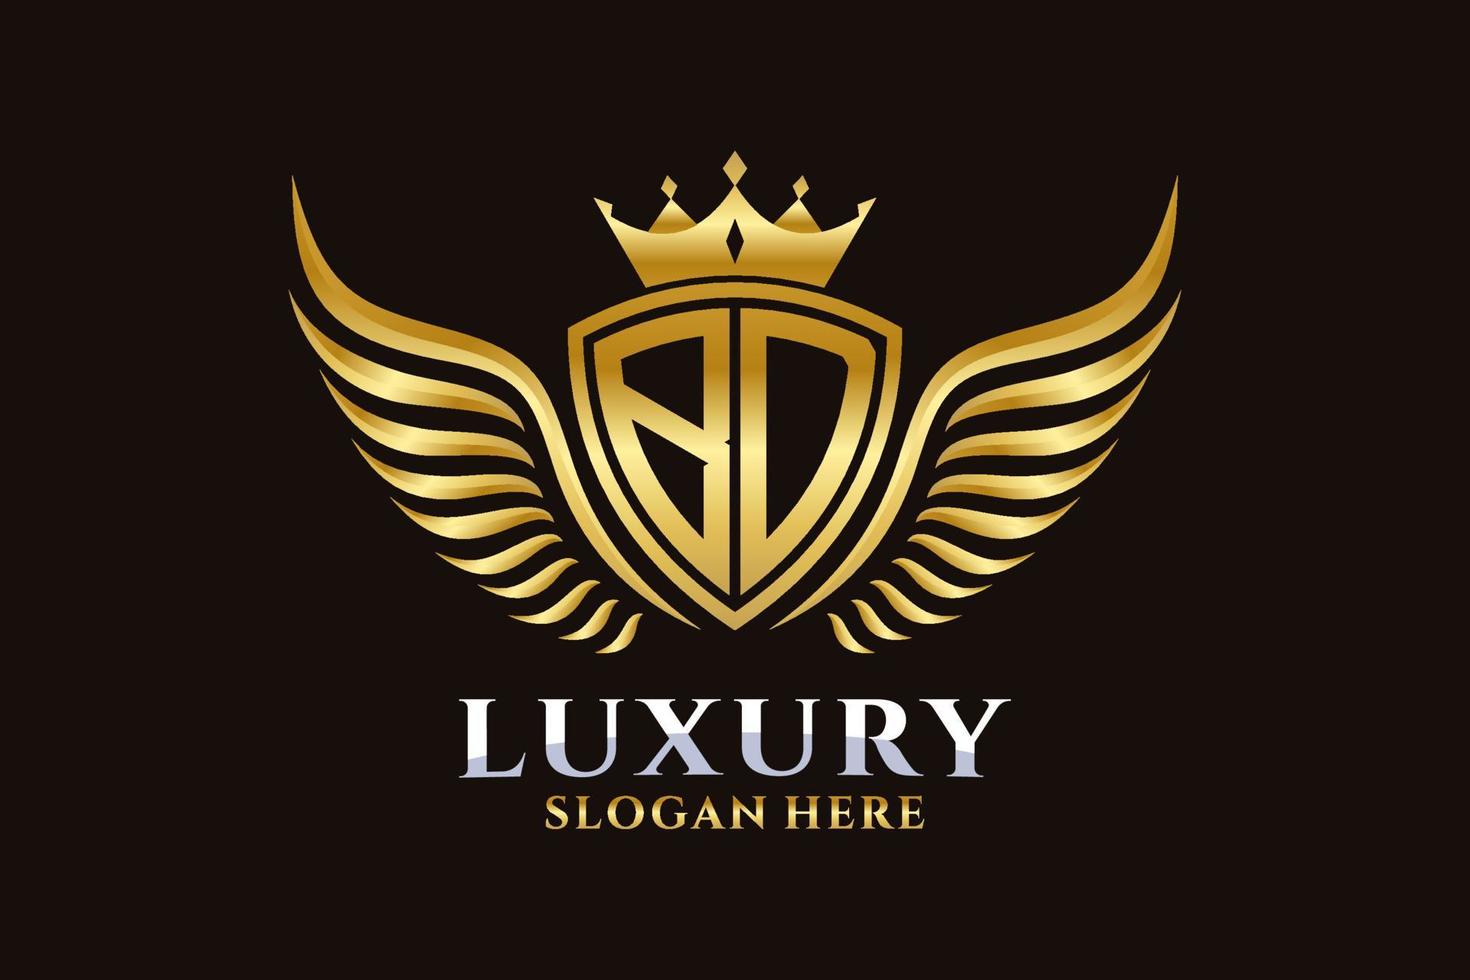 luxe Koninklijk vleugel brief bd kam goud kleur logo vector, zege logo, kam logo, vleugel logo, vector logo sjabloon.